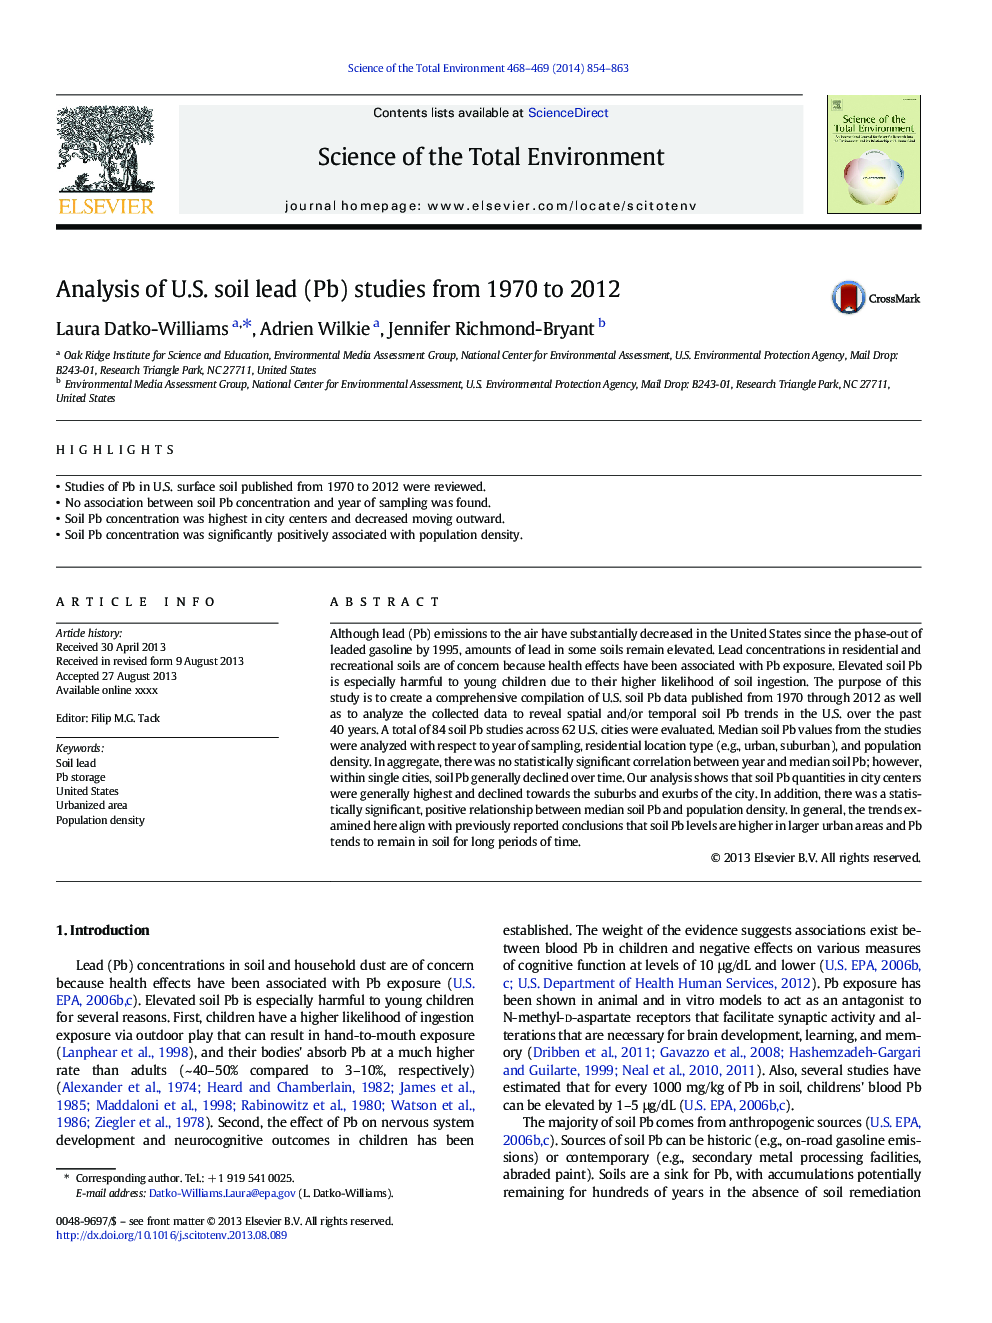 Analysis of U.S. soil lead (Pb) studies from 1970 to 2012